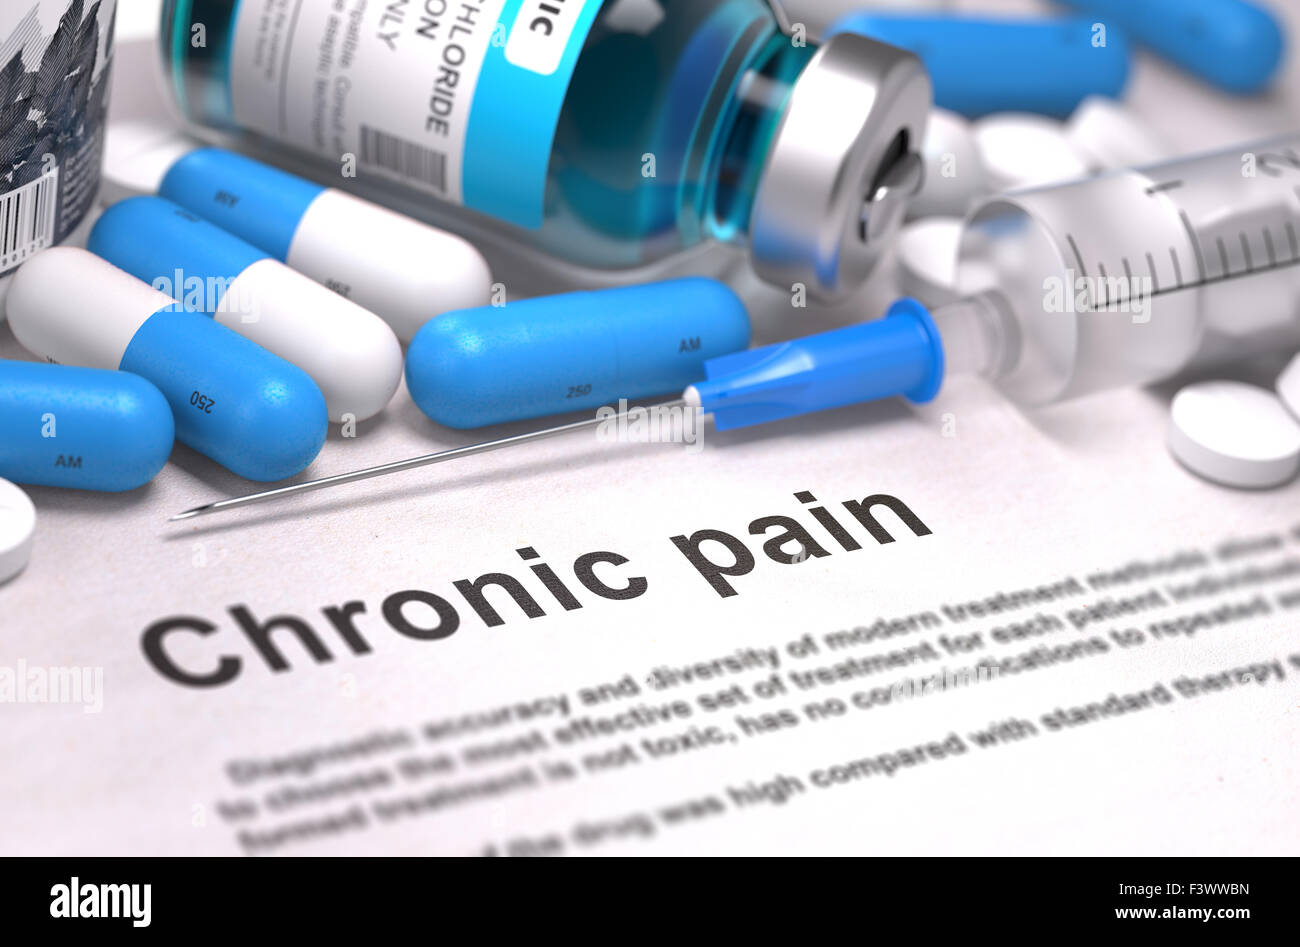 Chronic Pain. Medical Concept. Stock Photo